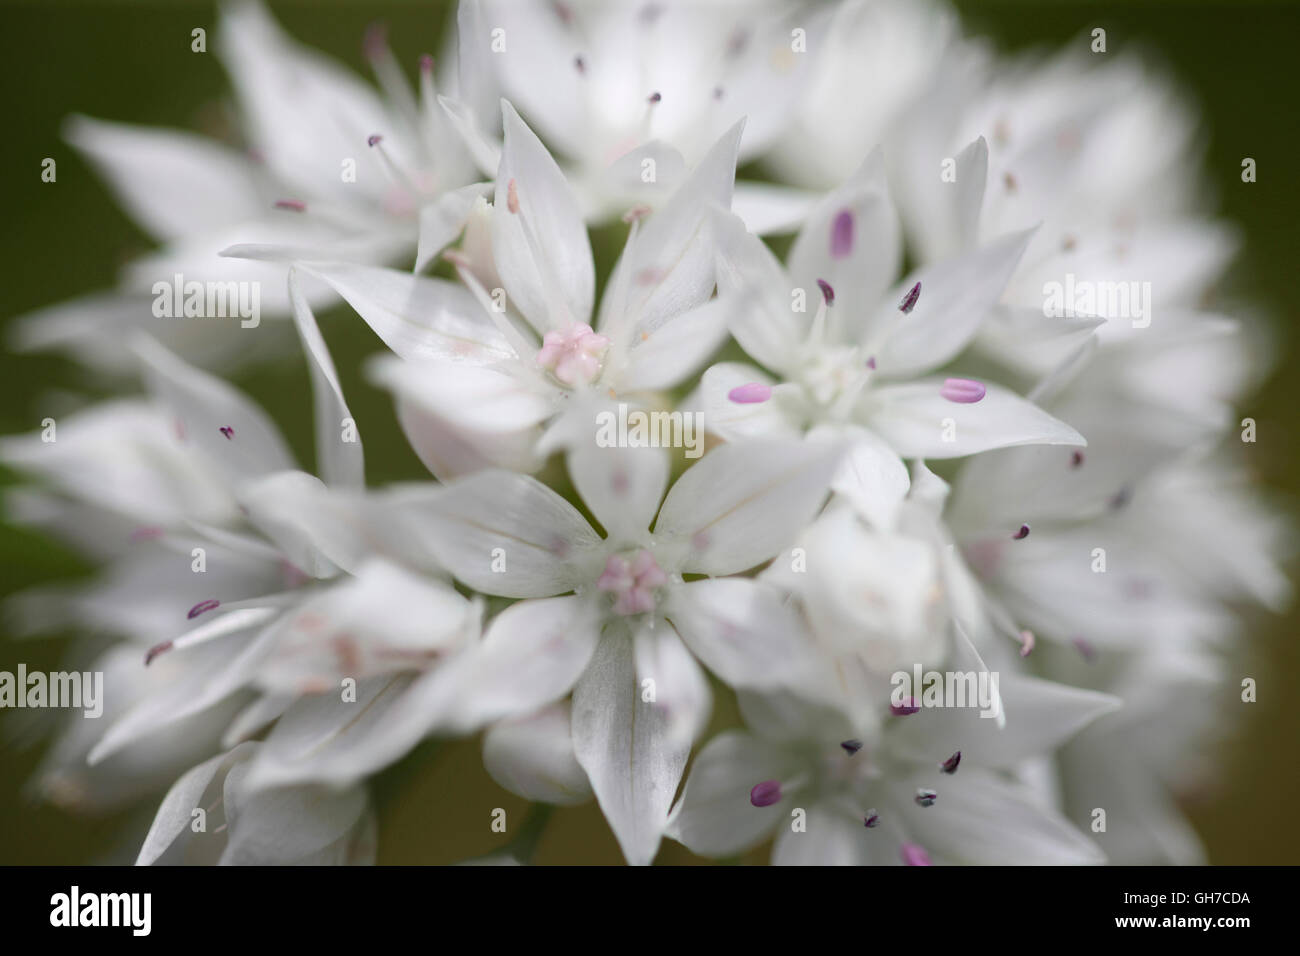 striking white allium graceful beauty close up, late Spring flowering Jane Ann Butler Photography JABP1540 Stock Photo